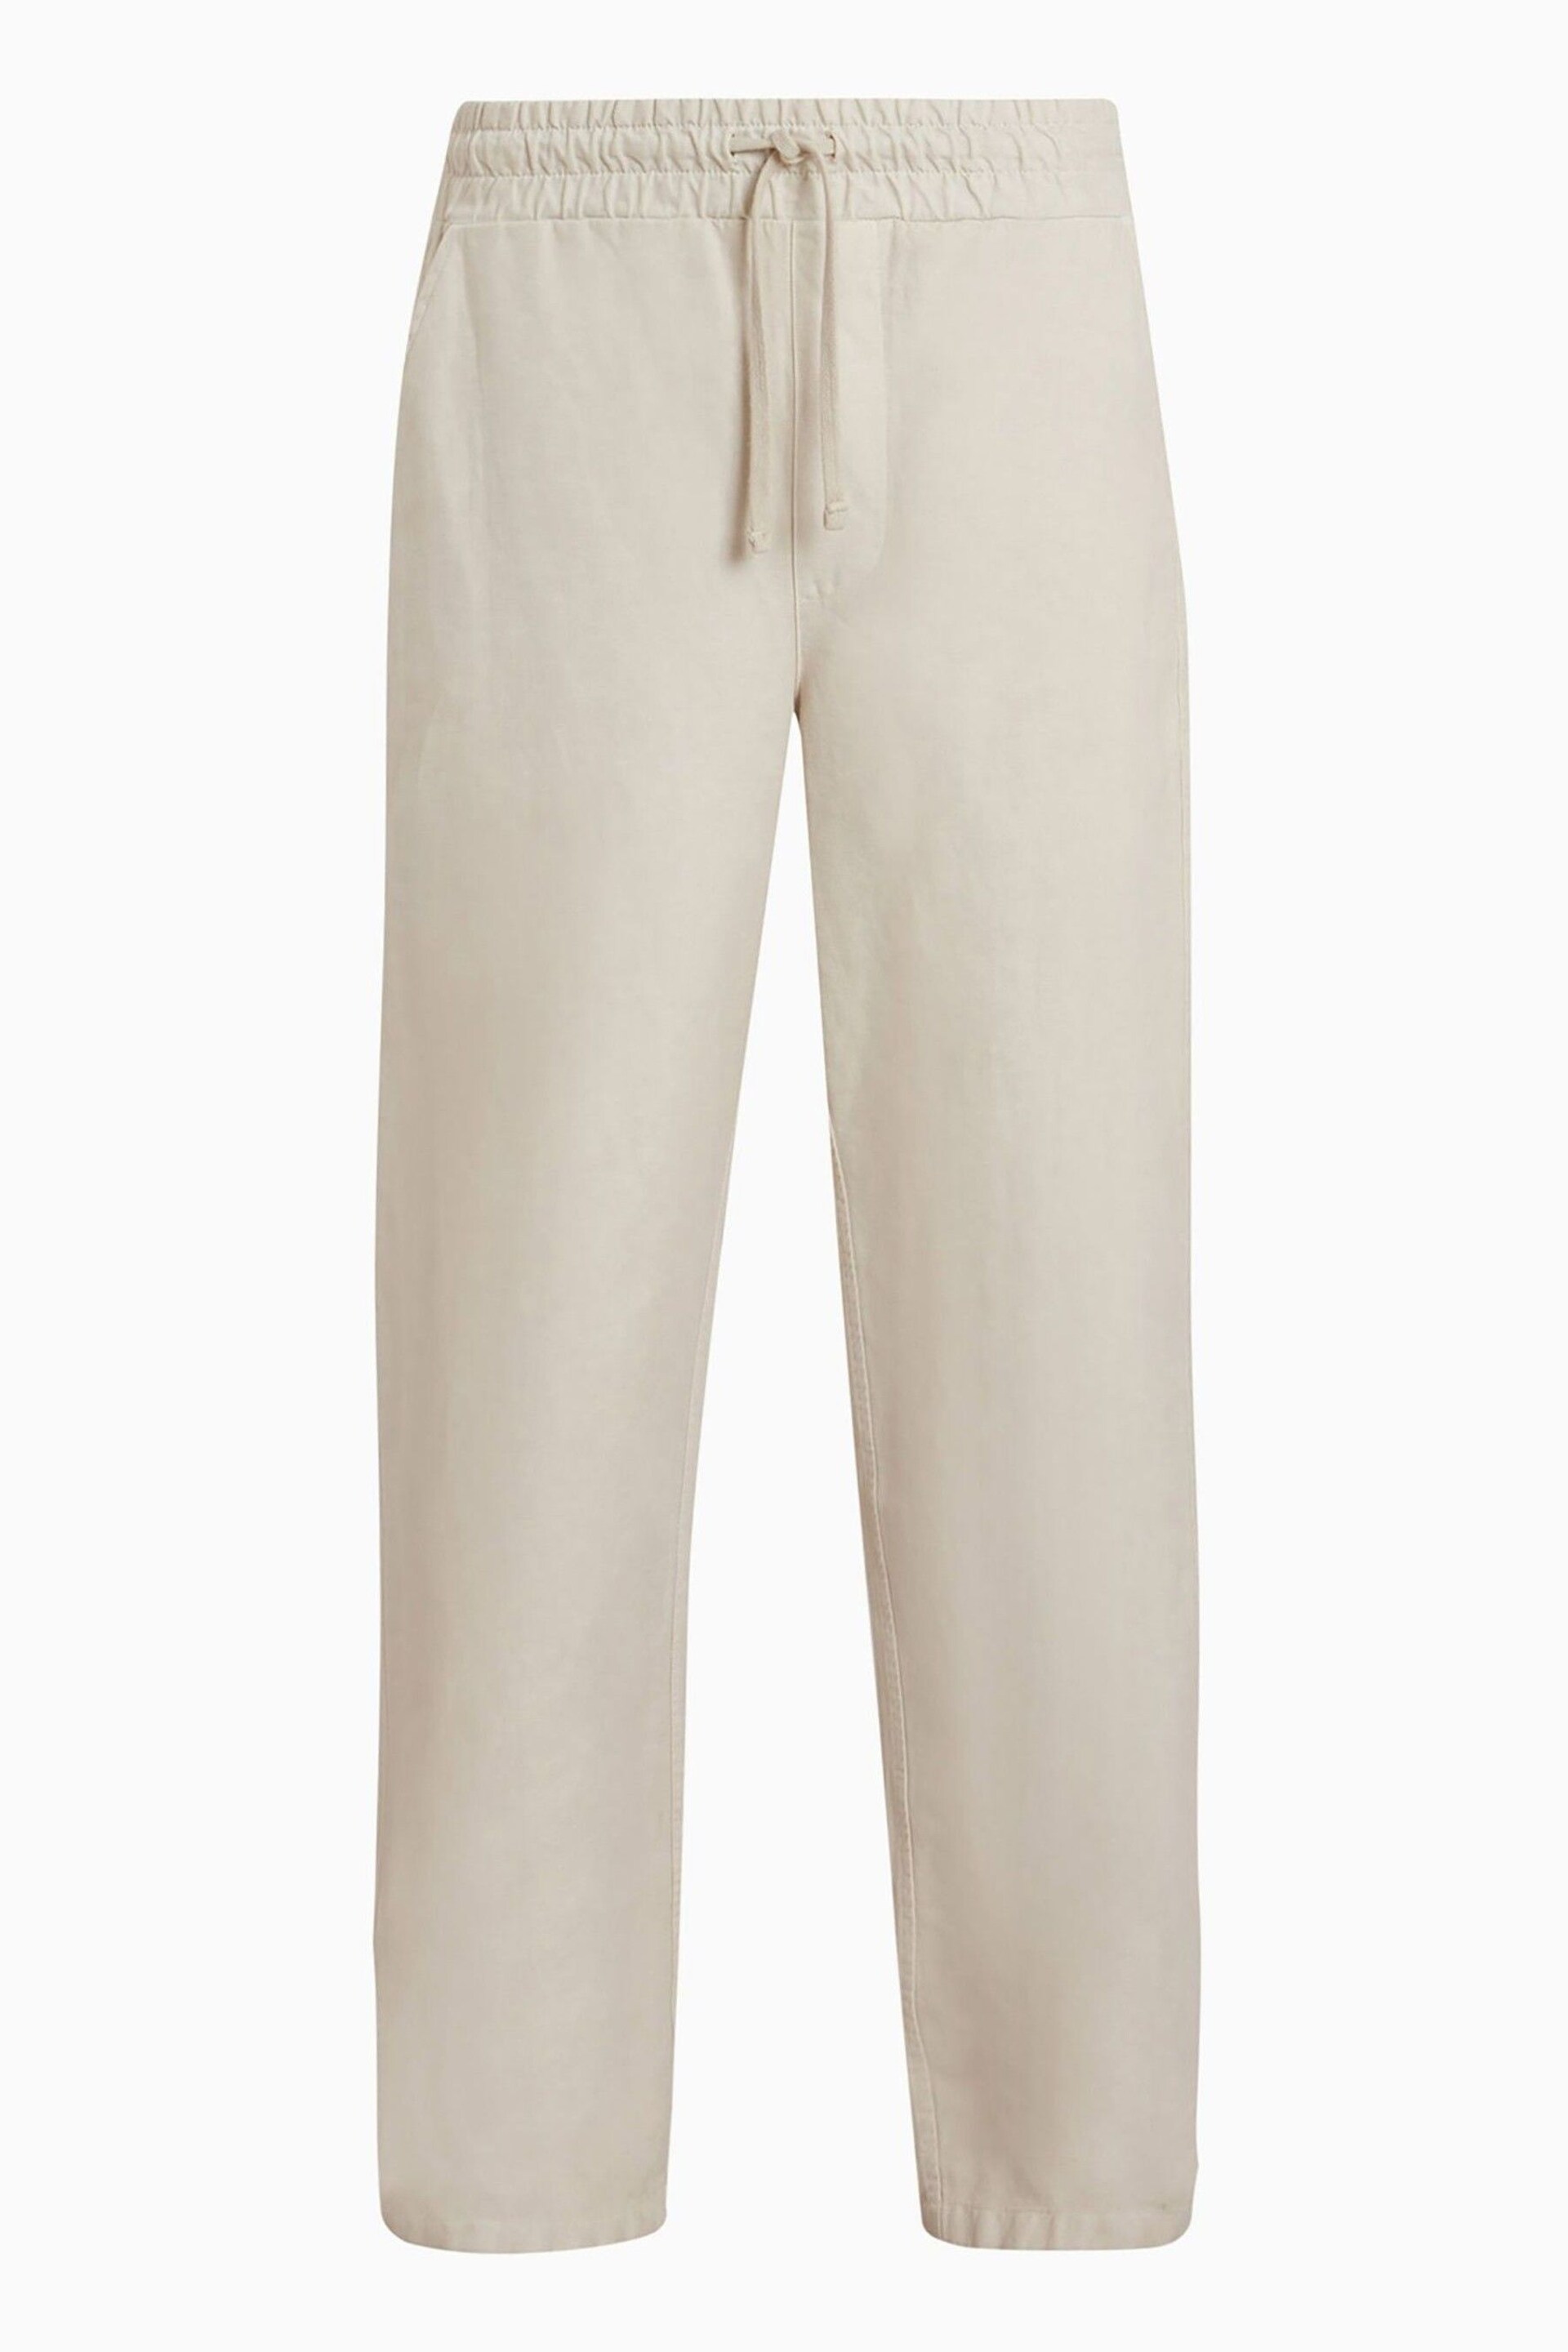 AllSaints Cream Hanbury Trousers - Image 4 of 6